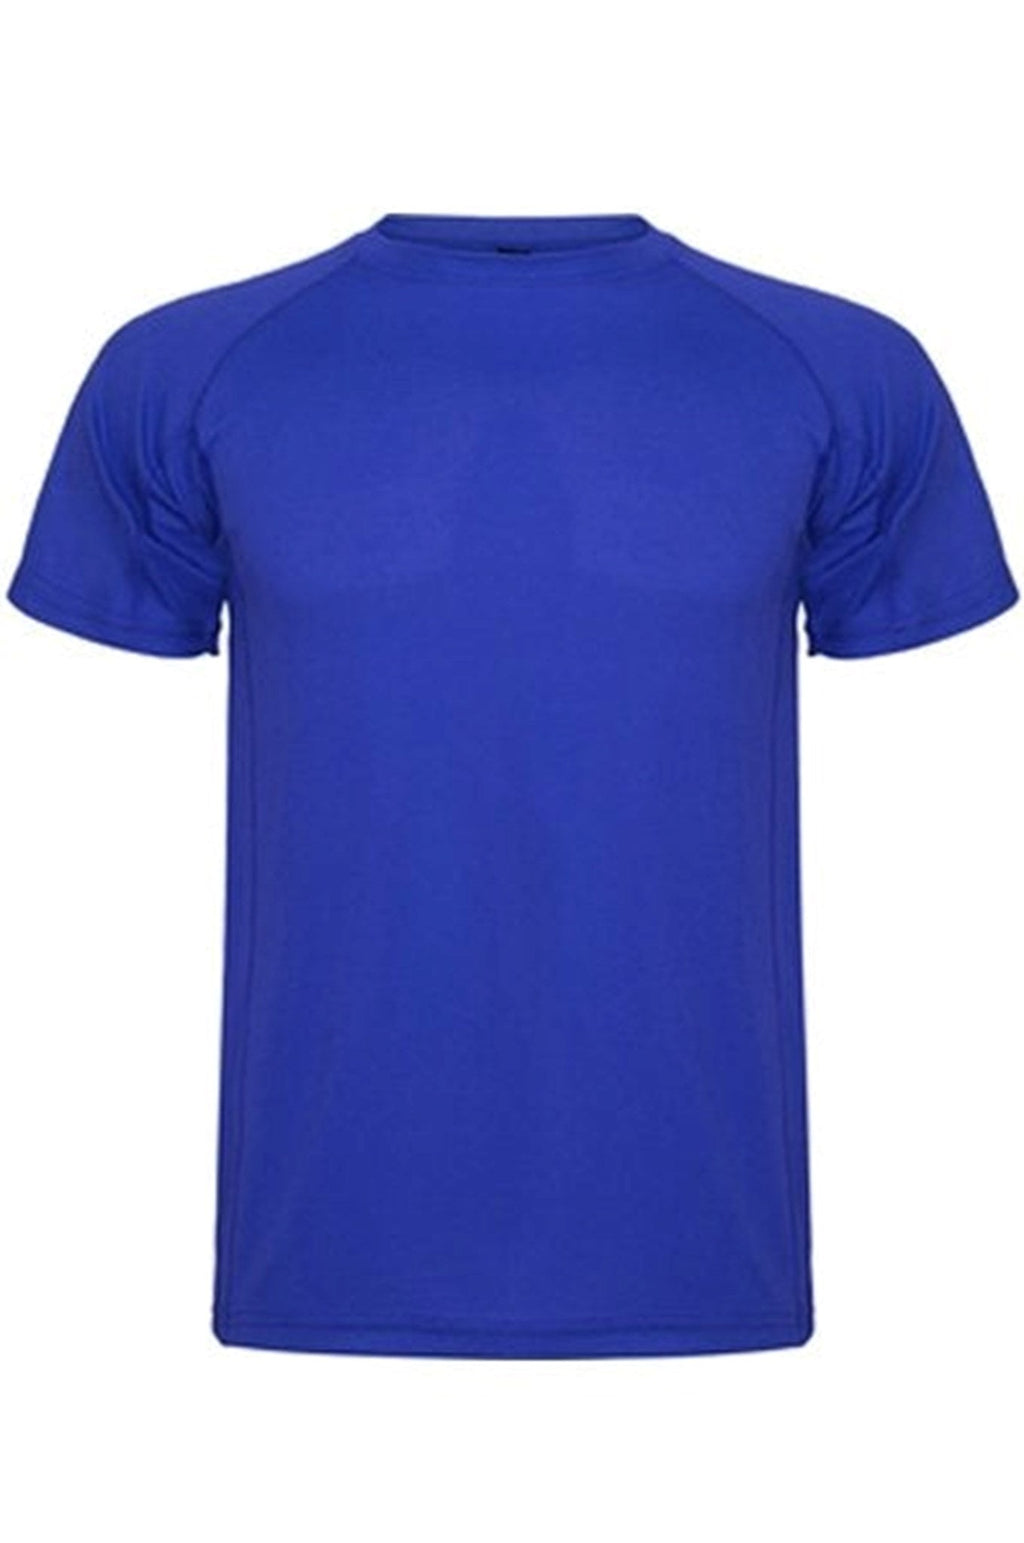 Training T-shirt - Blue